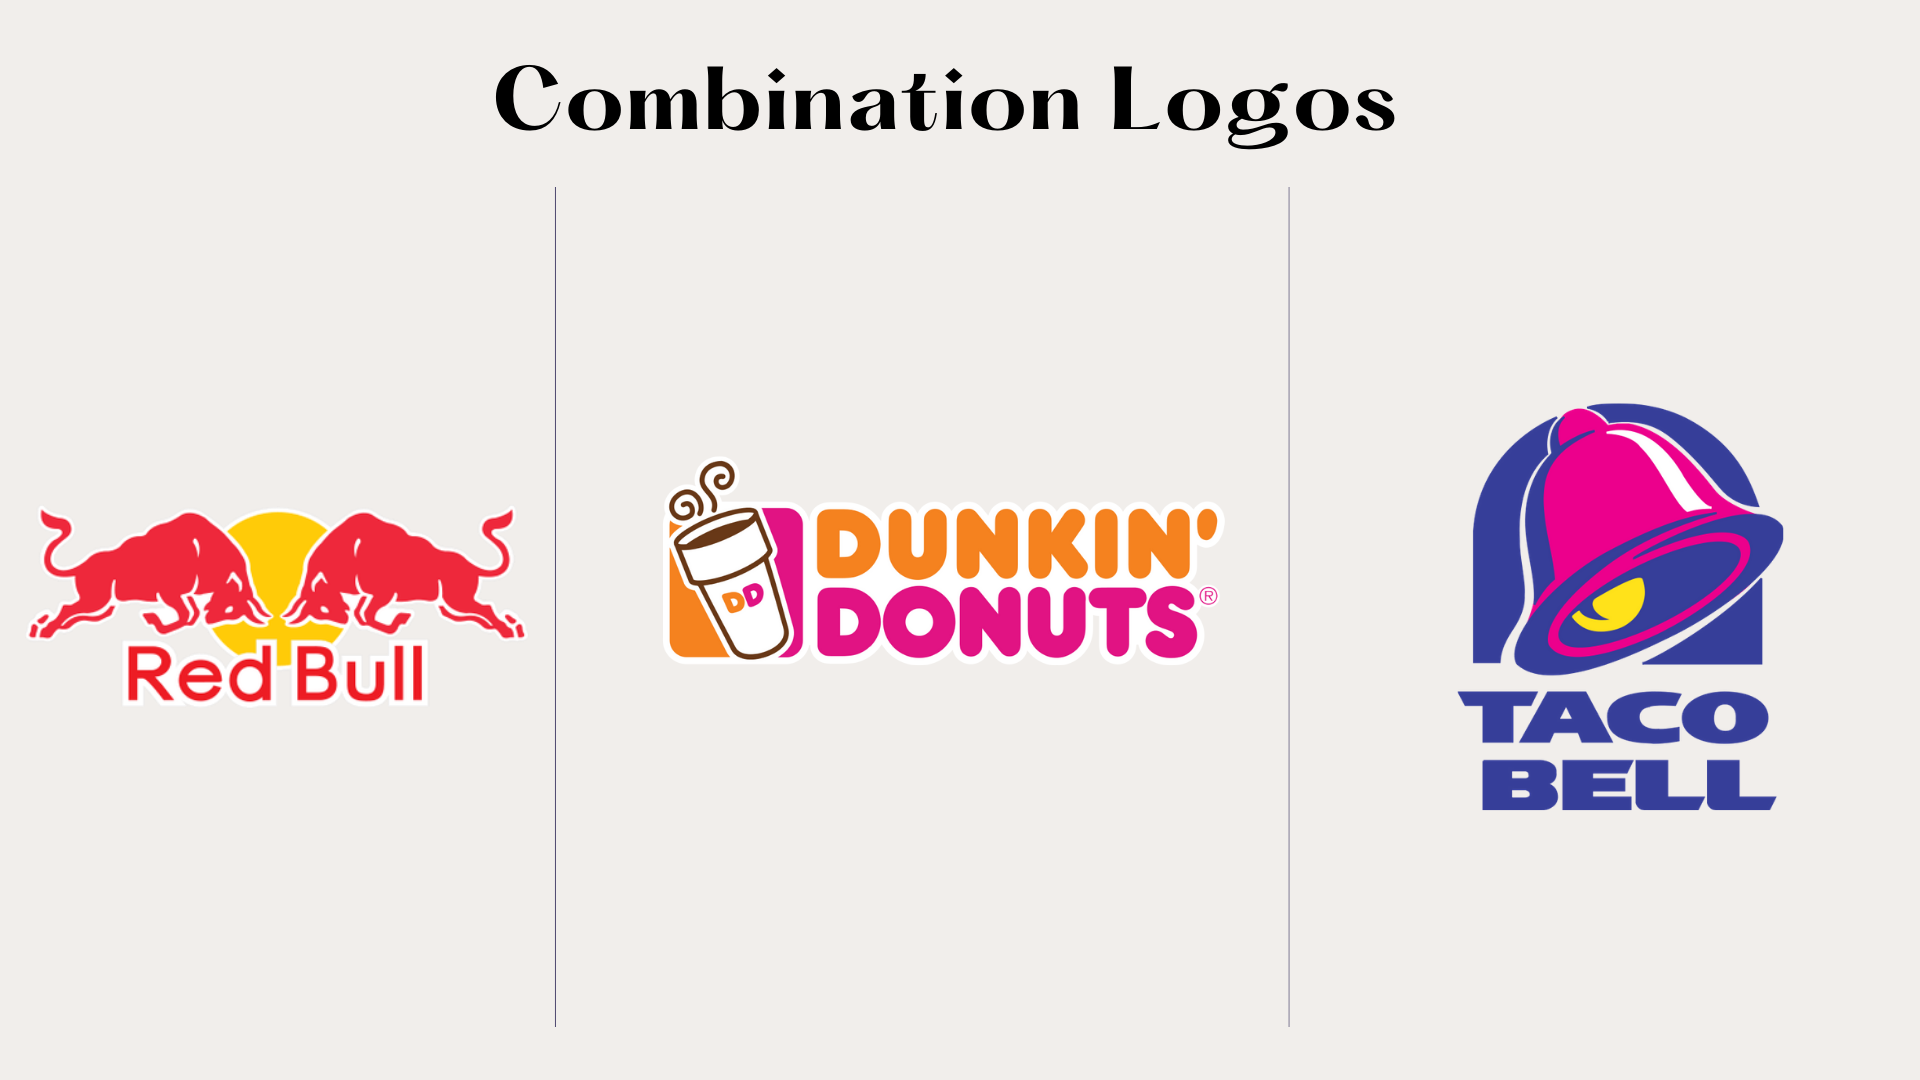 Combination logos